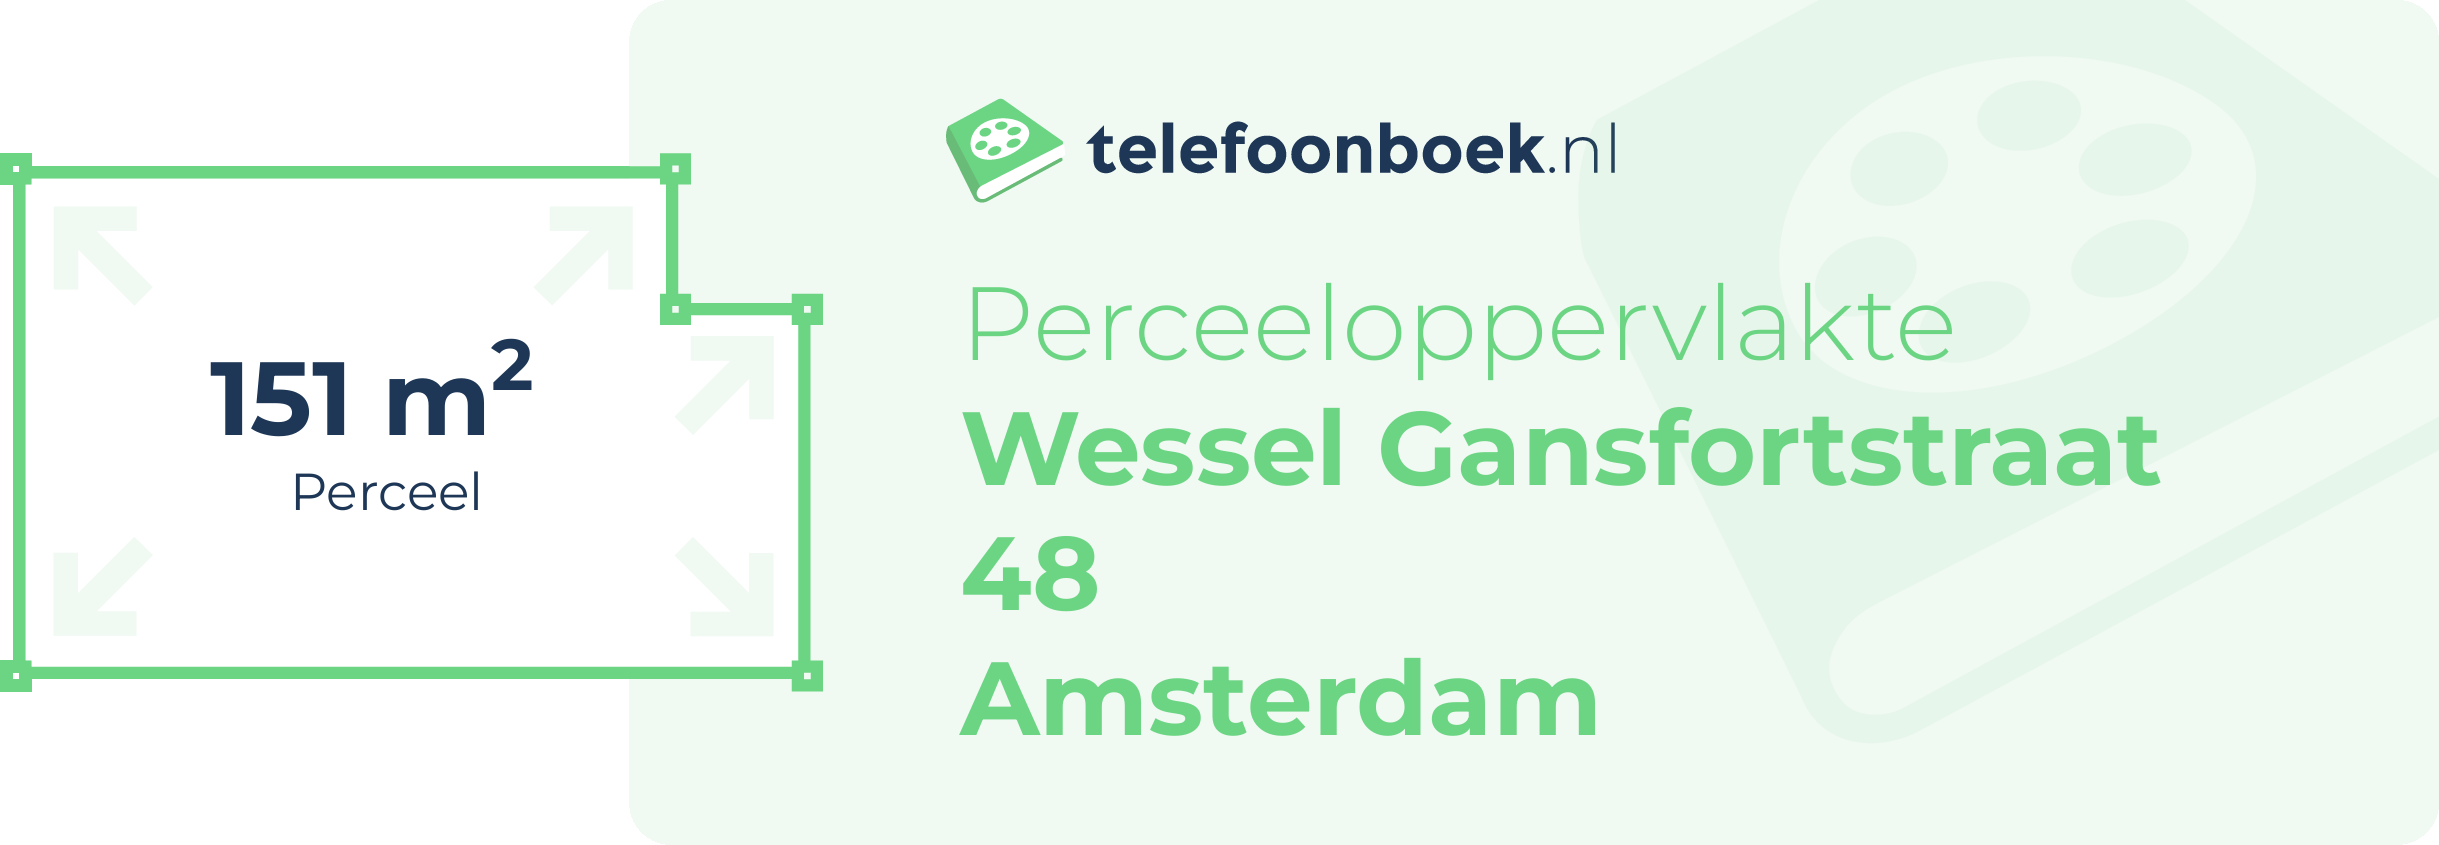 Perceeloppervlakte Wessel Gansfortstraat 48 Amsterdam